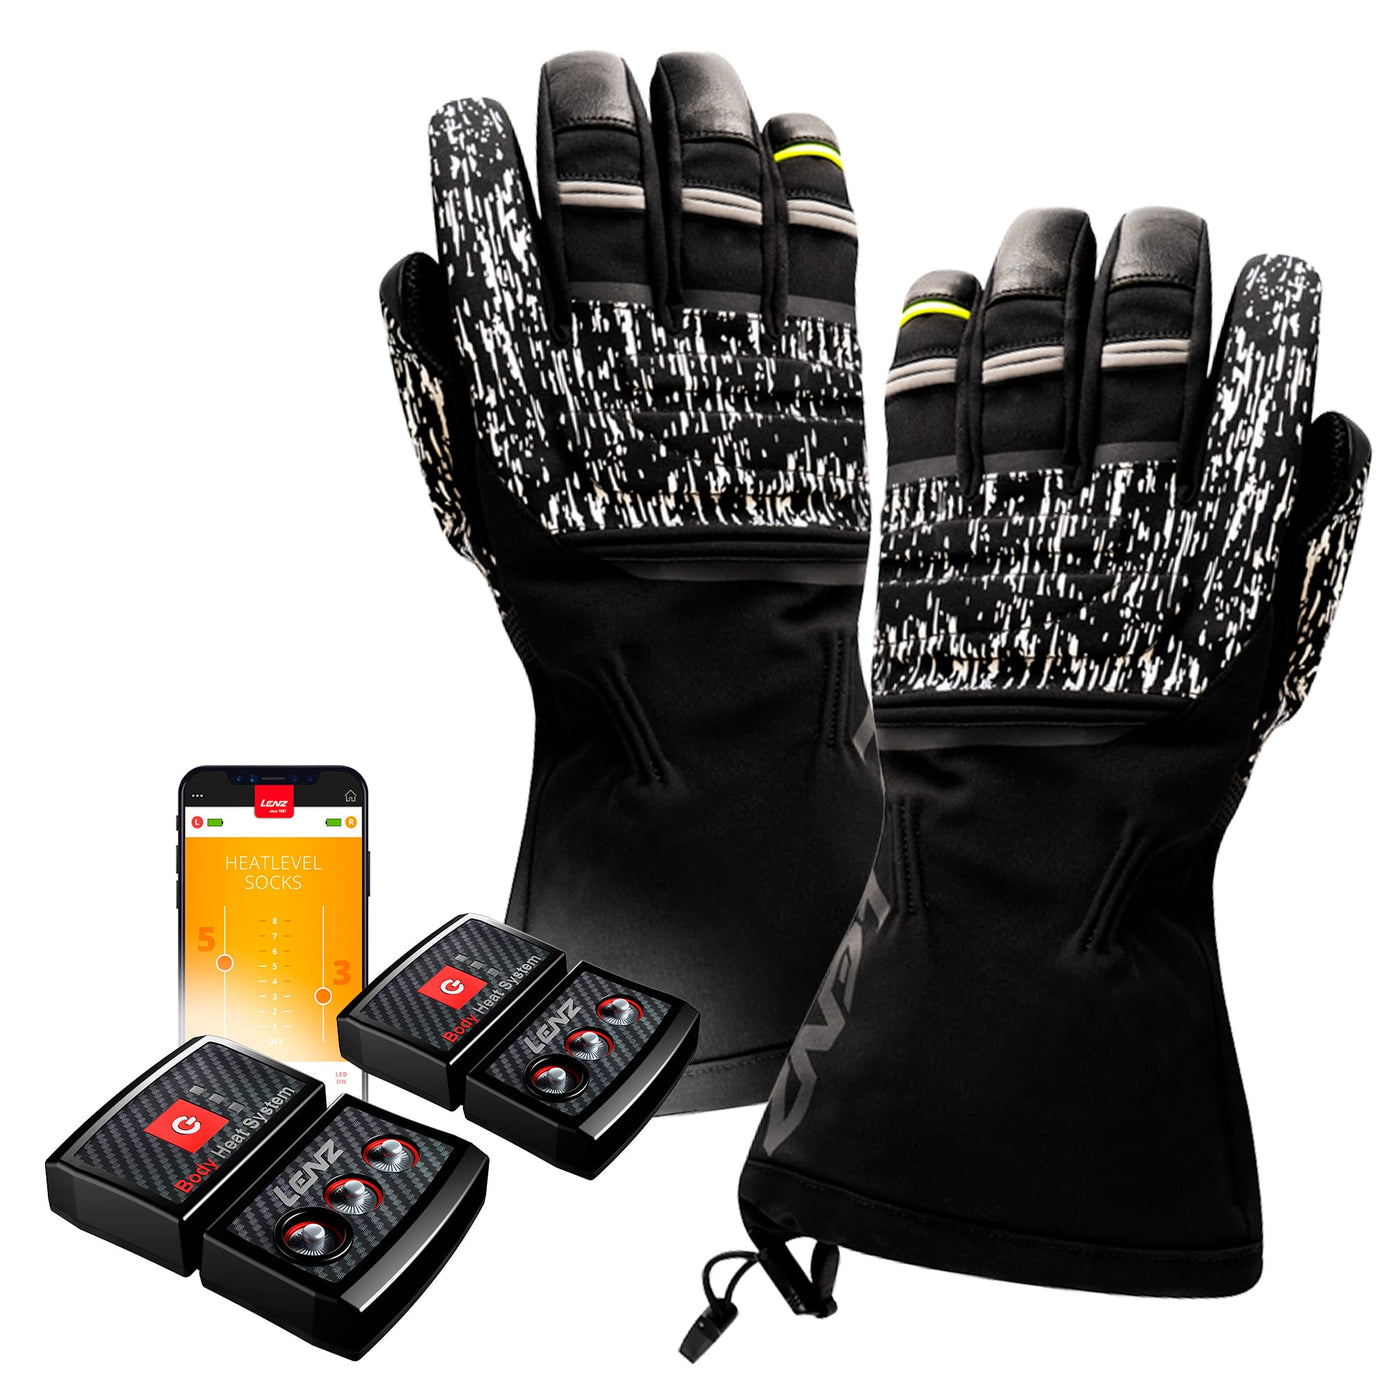 Lenz Heat Glove 7.0 Finger Motorrad/Bike-Handschuh (Unisex) SET MIT AKKU